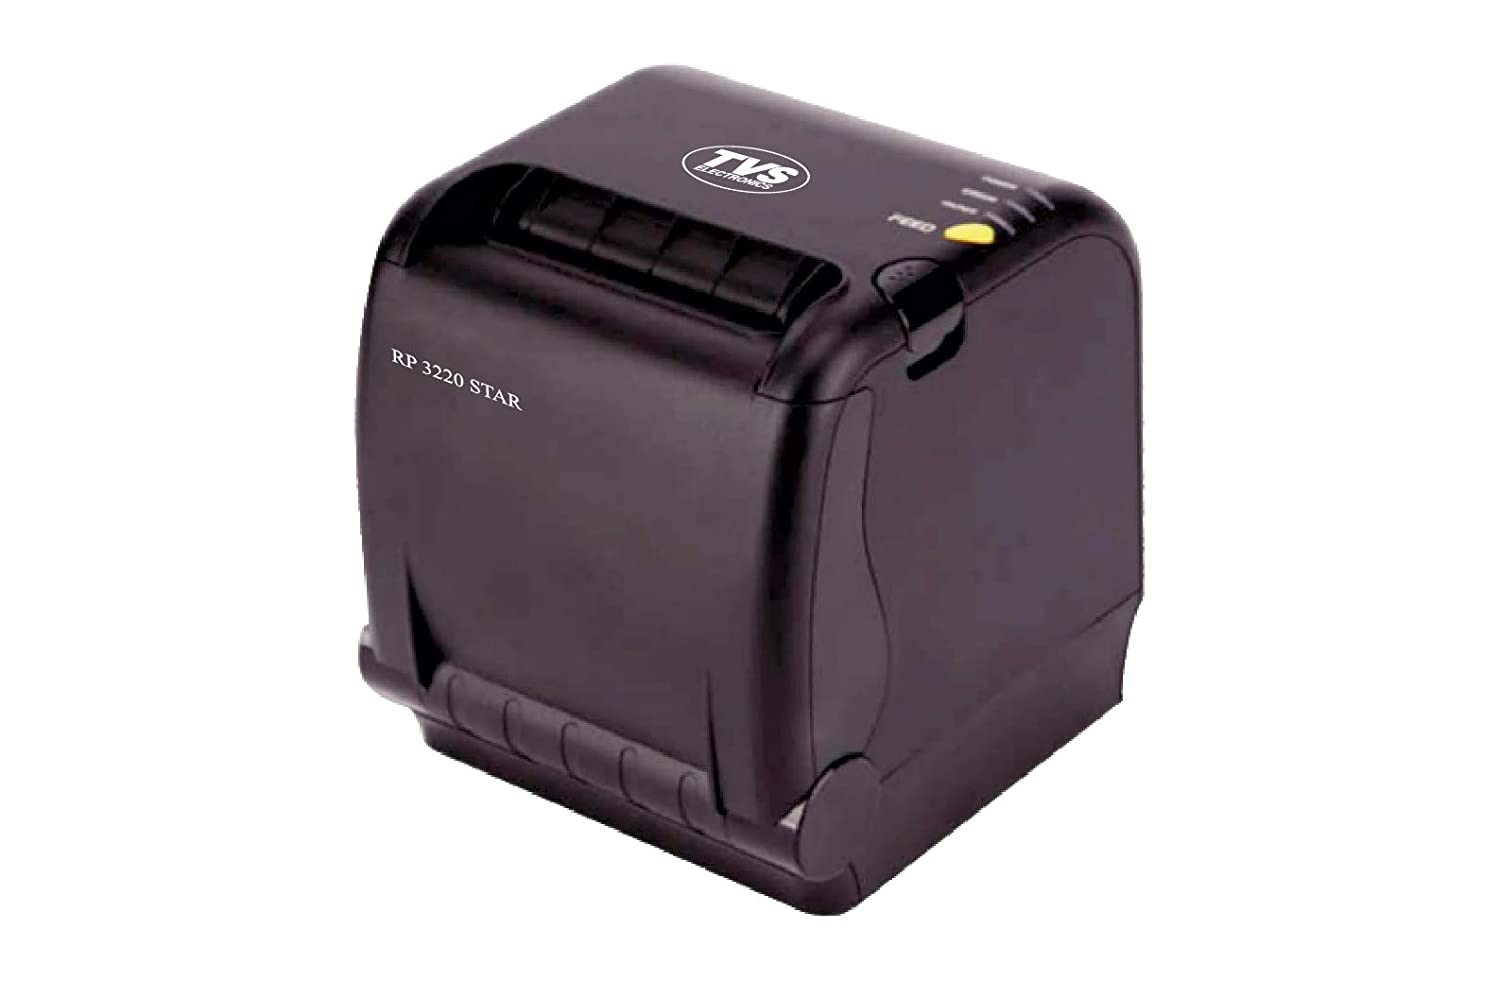 TVS Electronics RP 3220 Star Thermal Receipt Printer USB-Printers, Copiers & Fax Machines-dealsplant